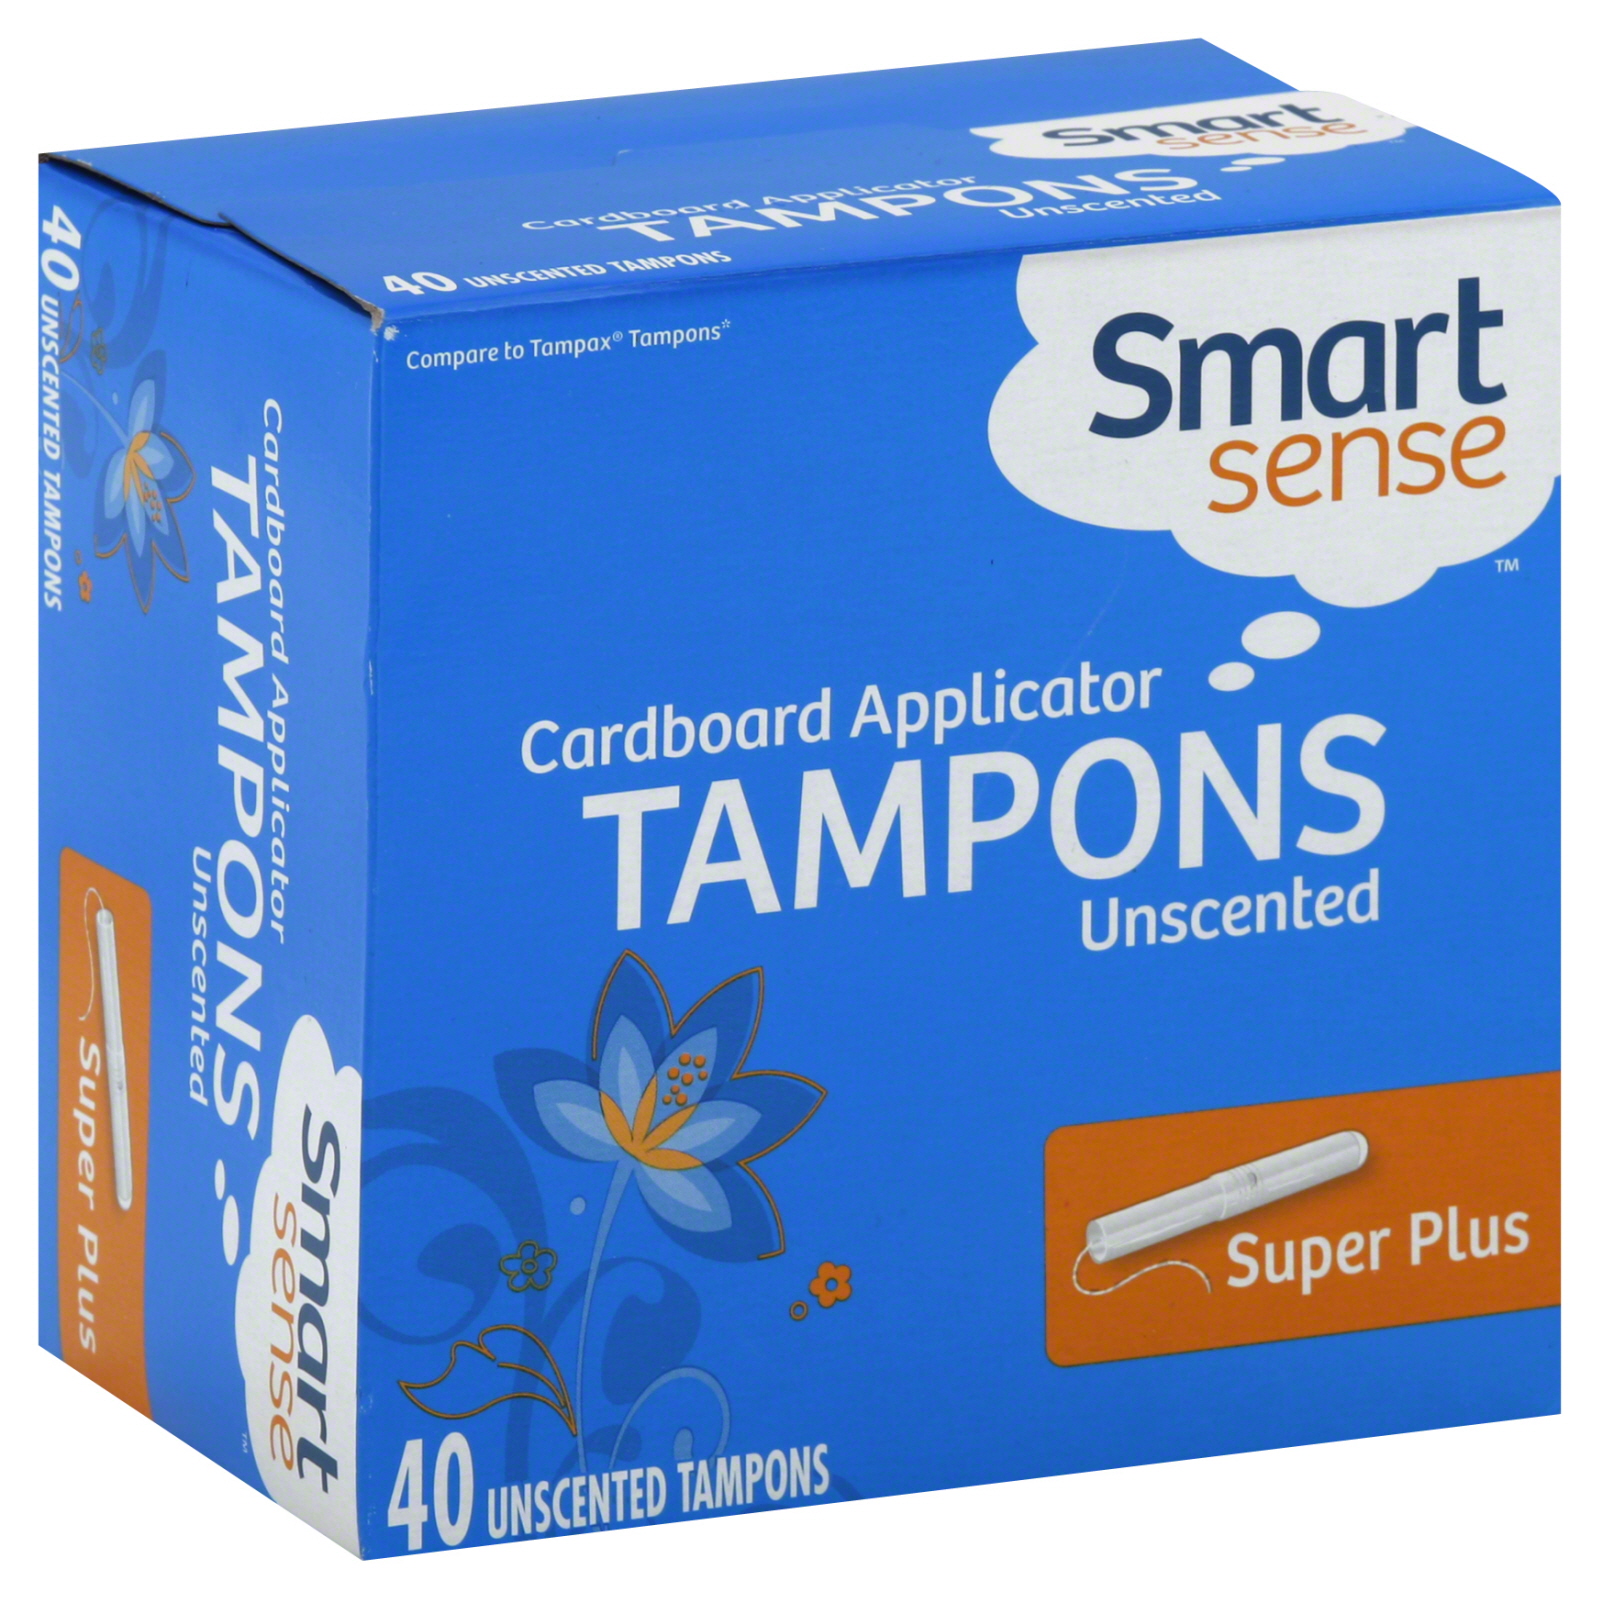 Smart Sense Tampons, Cardboard Applicator, Super Plus, Unscented 40 tampons